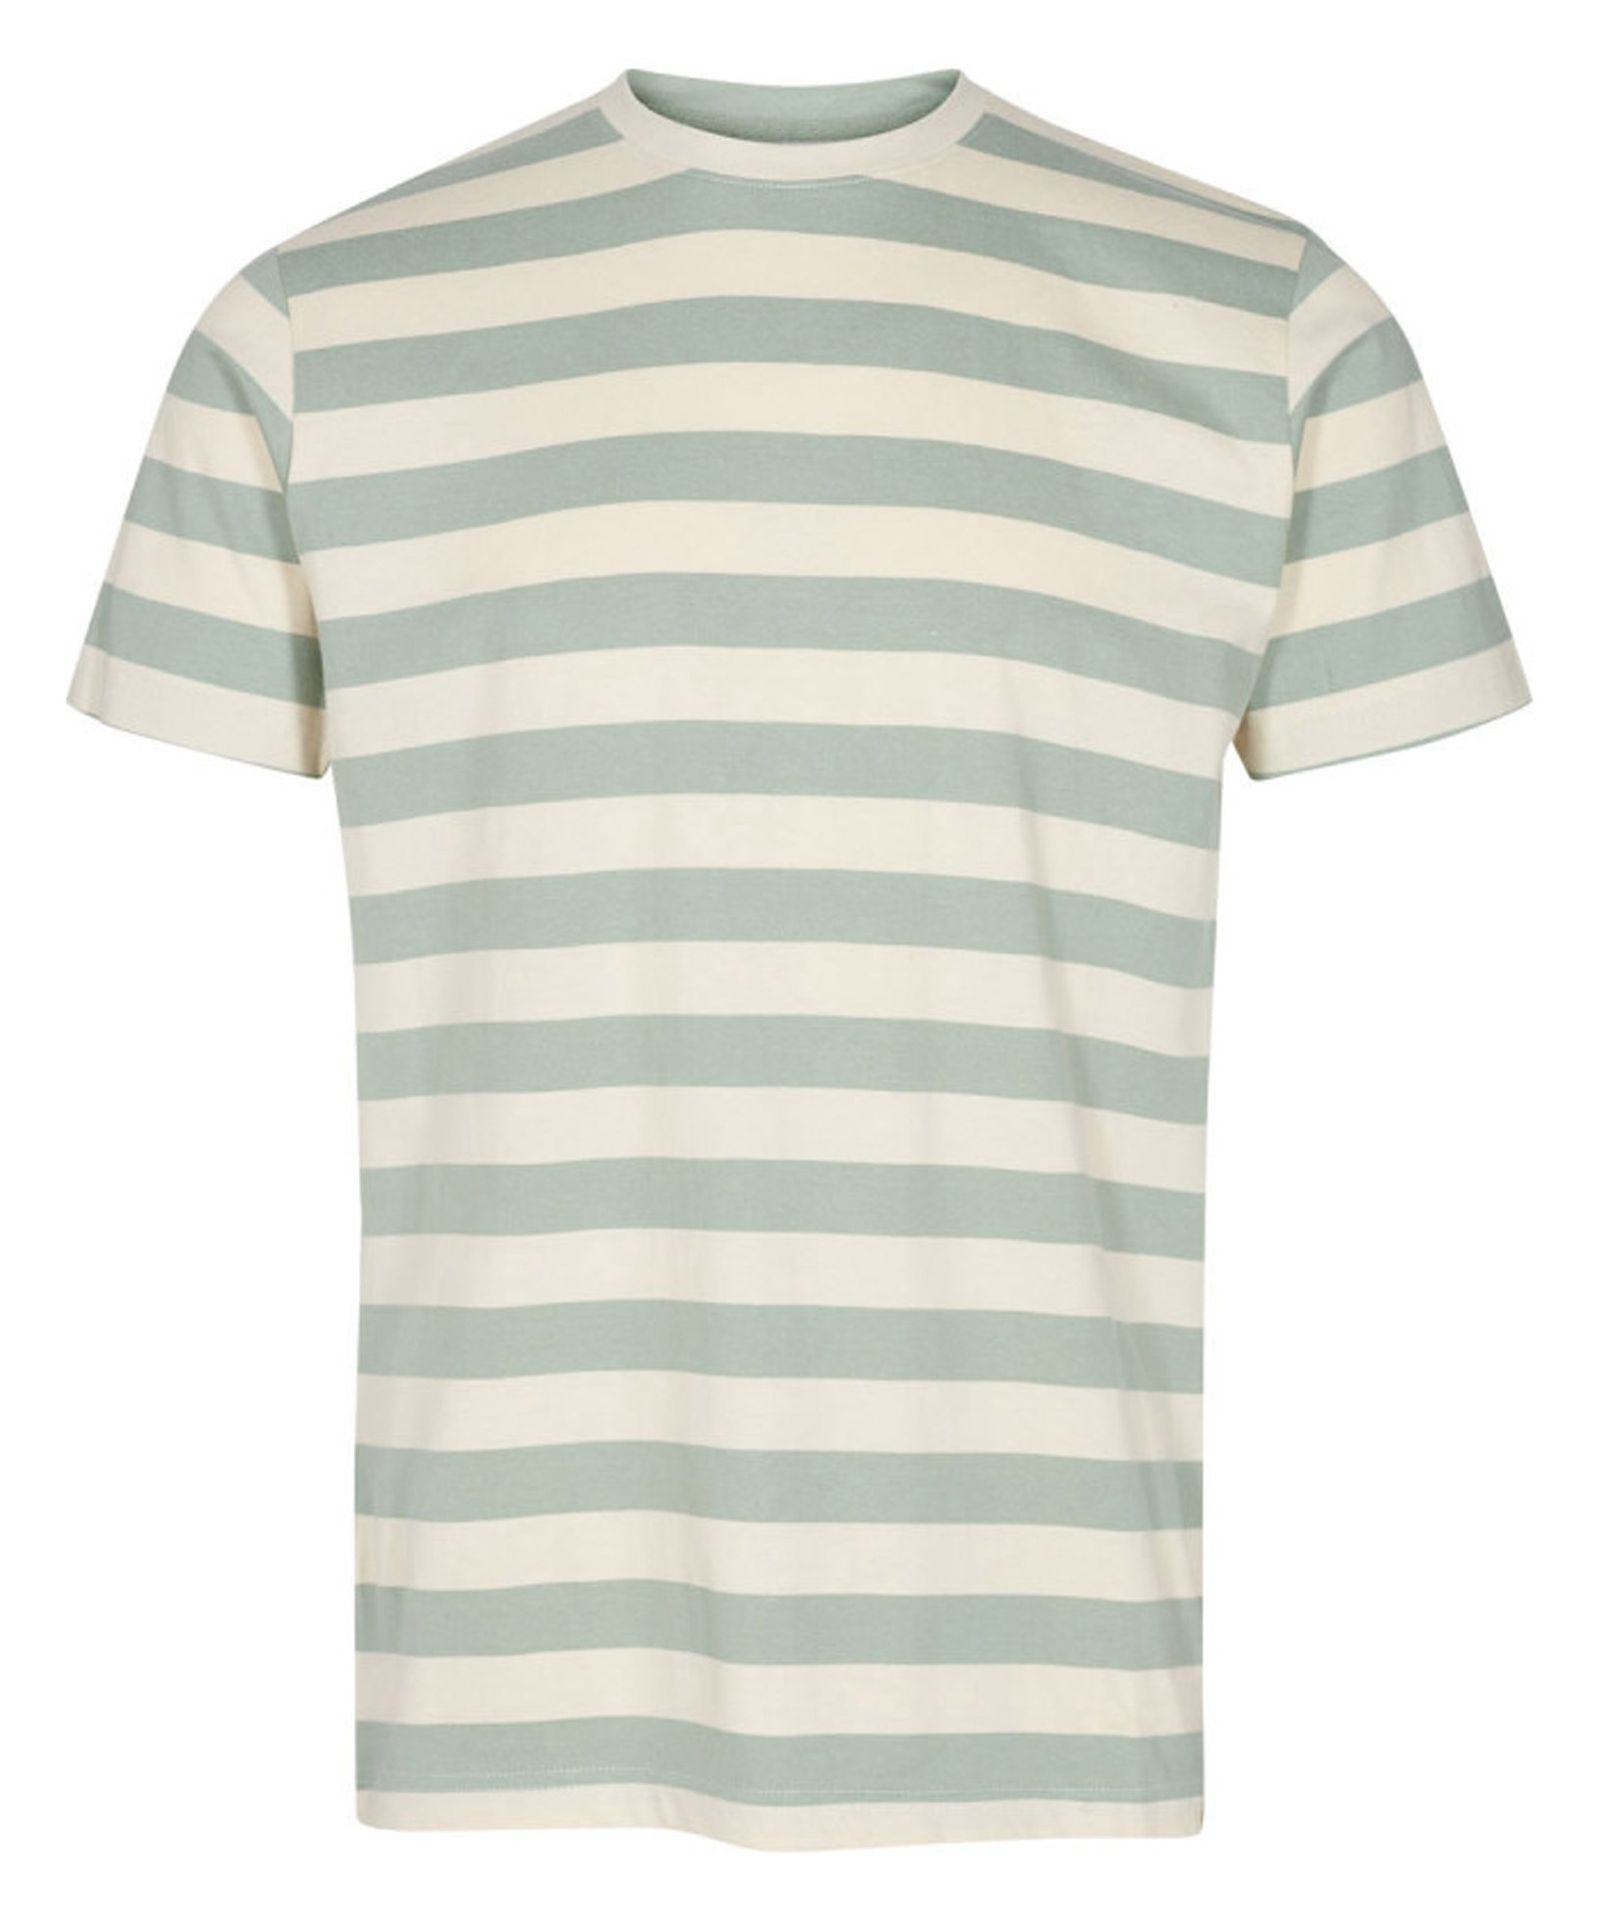 تی شرت نخی مردانه Thiago - مینیموم - سبز روشن - 1